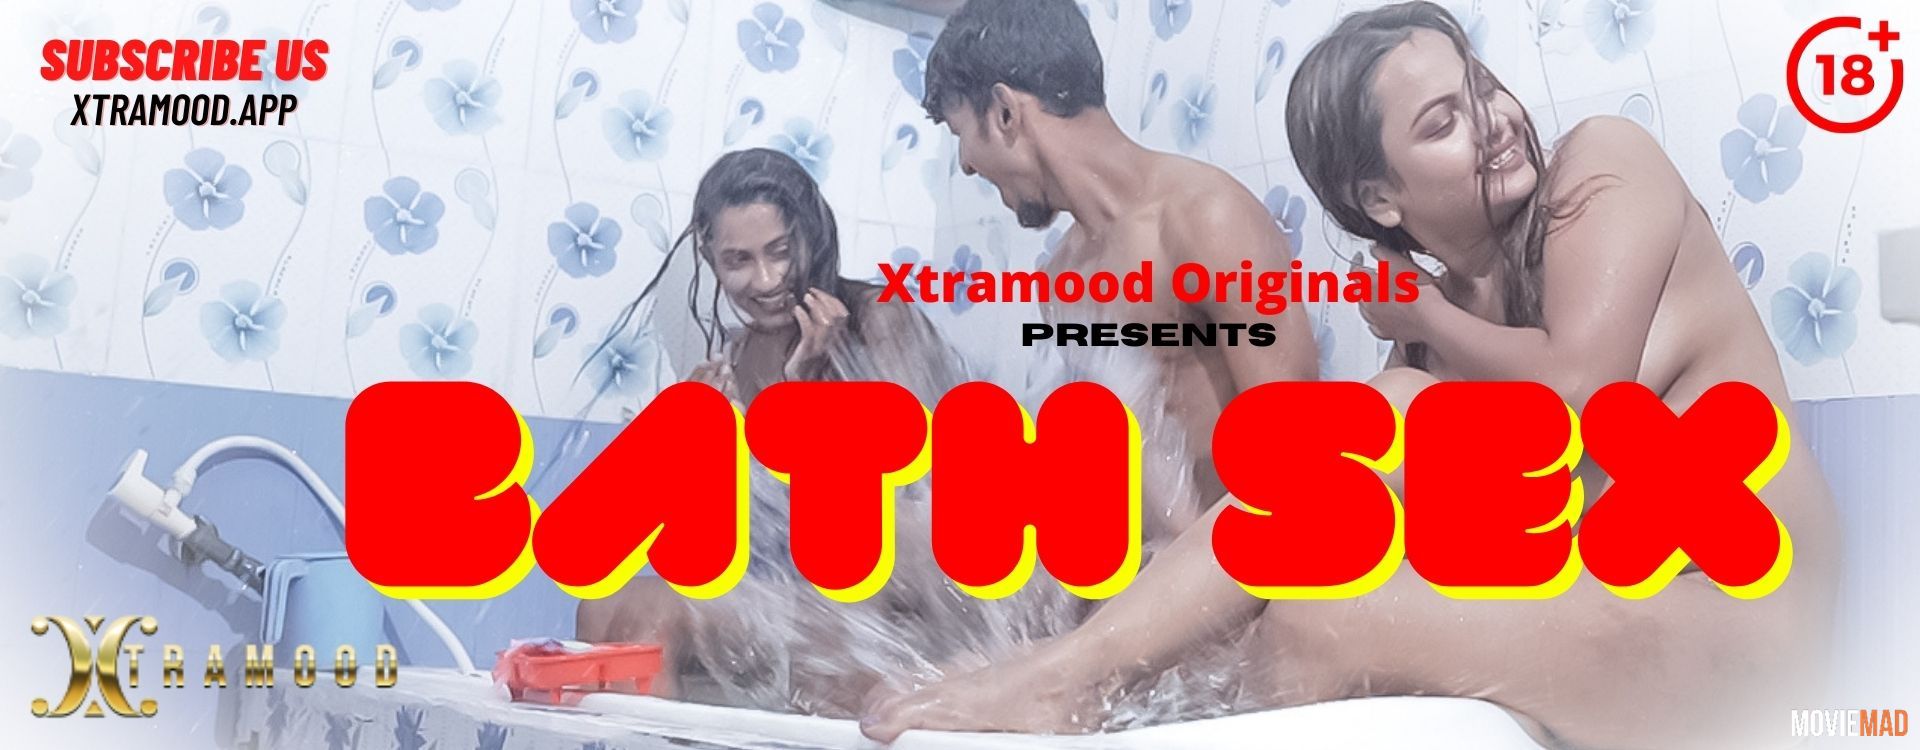 full moviesBath Sex 2021 Xtramood Originals Hindi Short Film HDRip 720p 480p